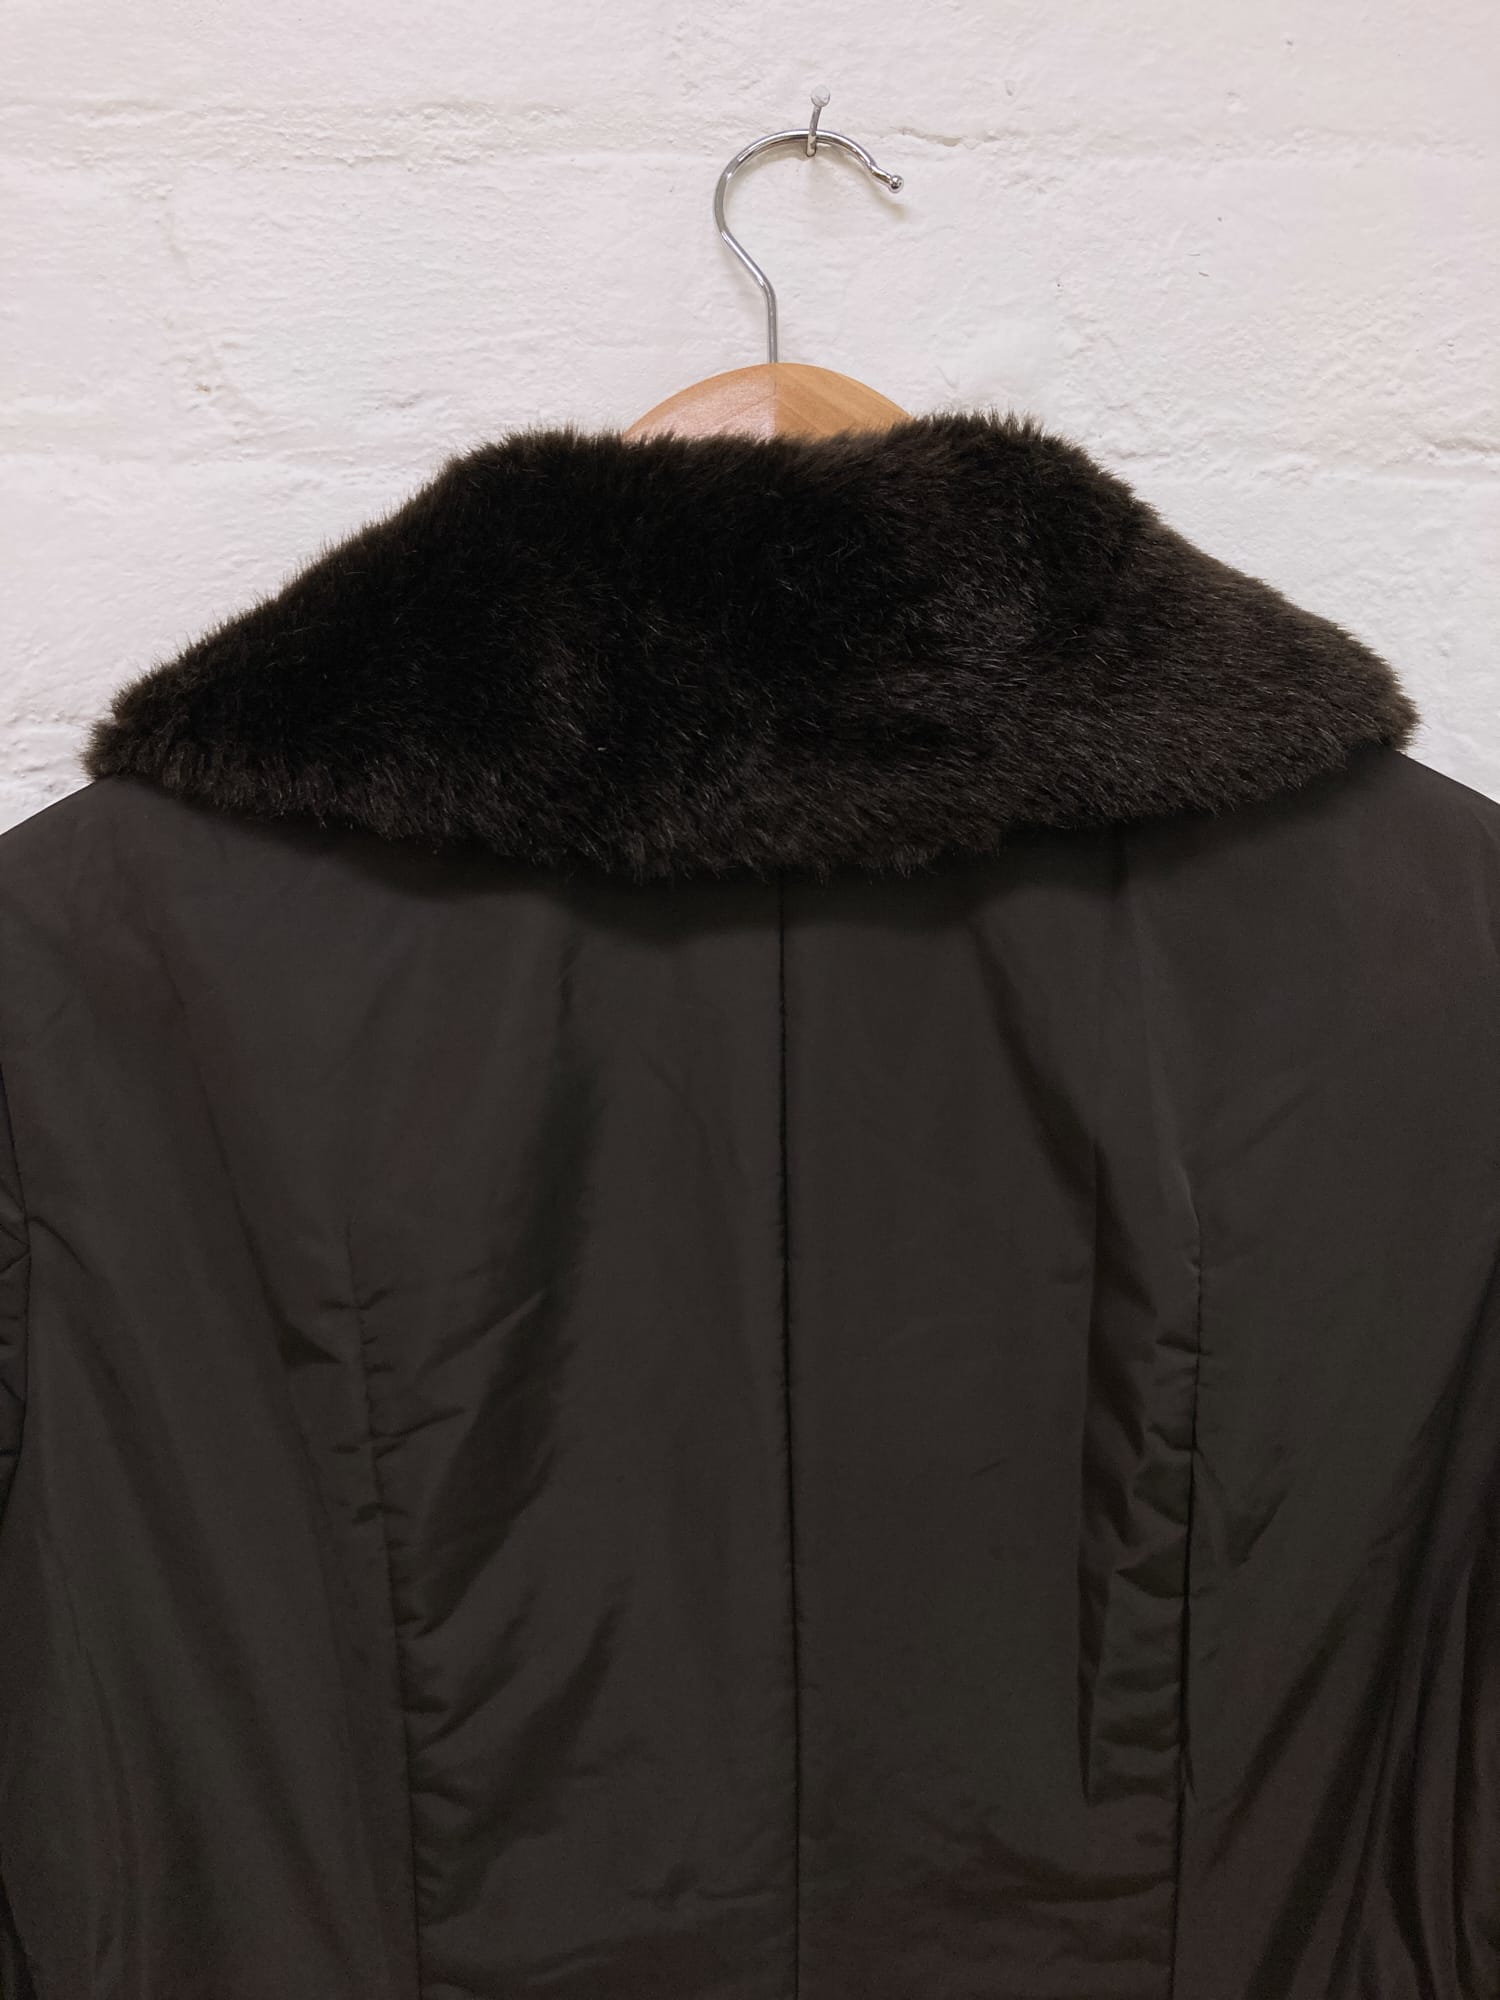 A.T. Atsuro Tayama dark brown nylon coat with detachable faux fur collar